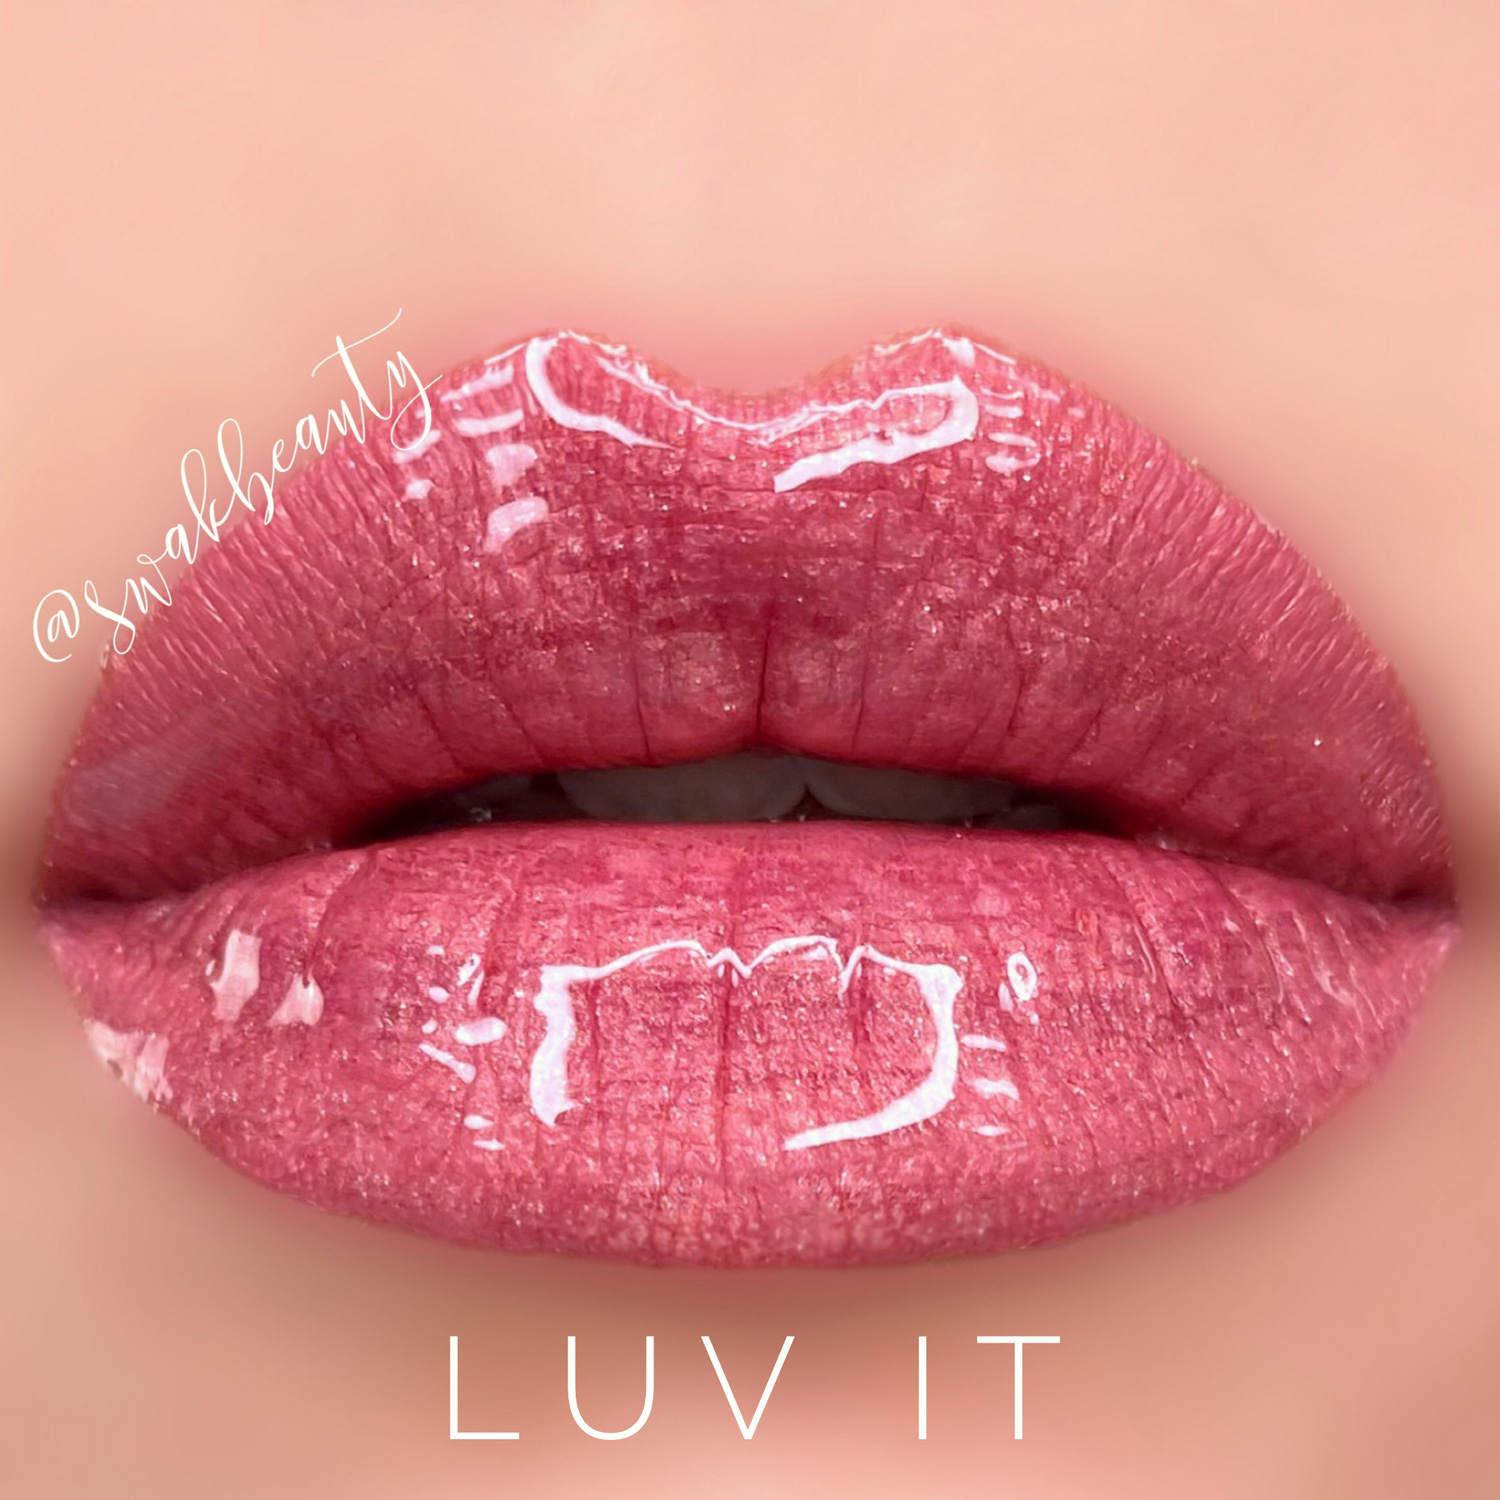 Luv-It LipSense® – swakbeauty.com